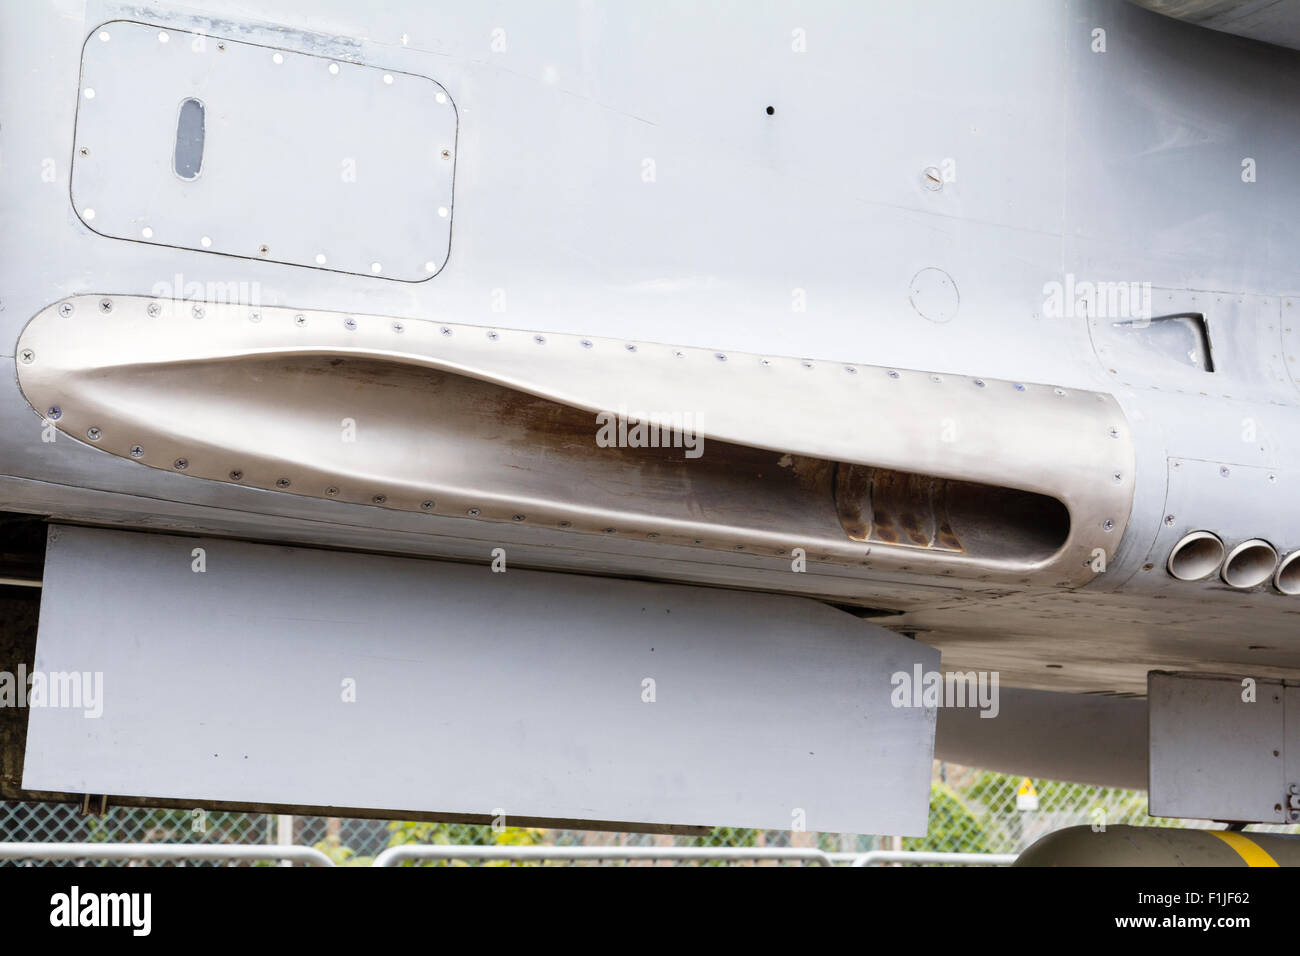 Manston airport museum. British GR3 Jaguar Fighter, 30mm DEFA cannon port, Aden 30 mm cannon on lower fuselage. Stock Photo